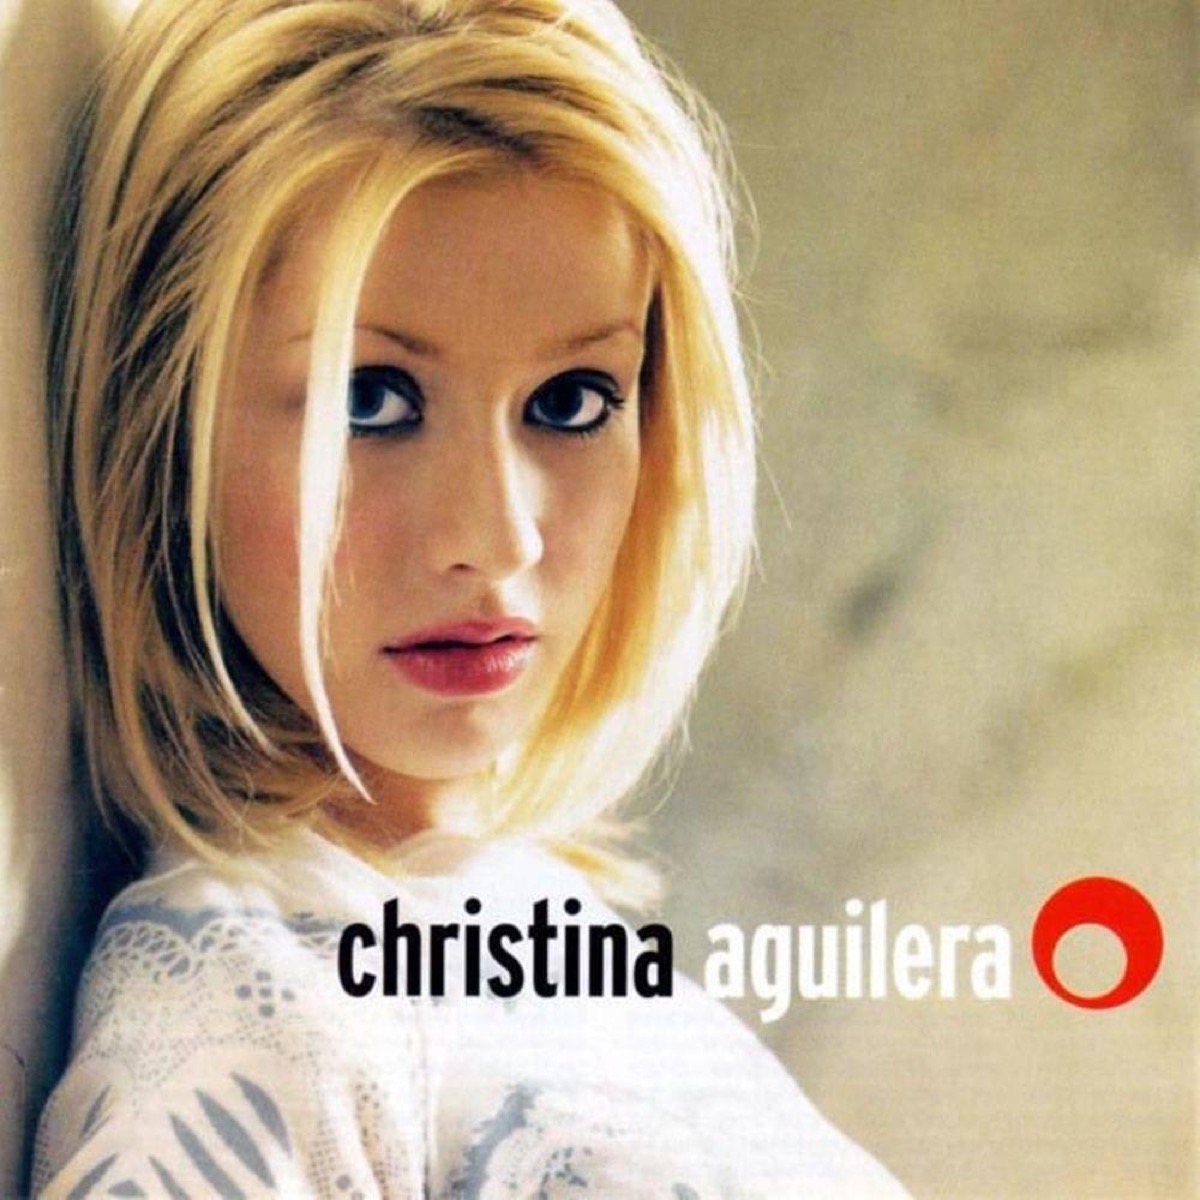 Christina Aguilera self-titled album cover